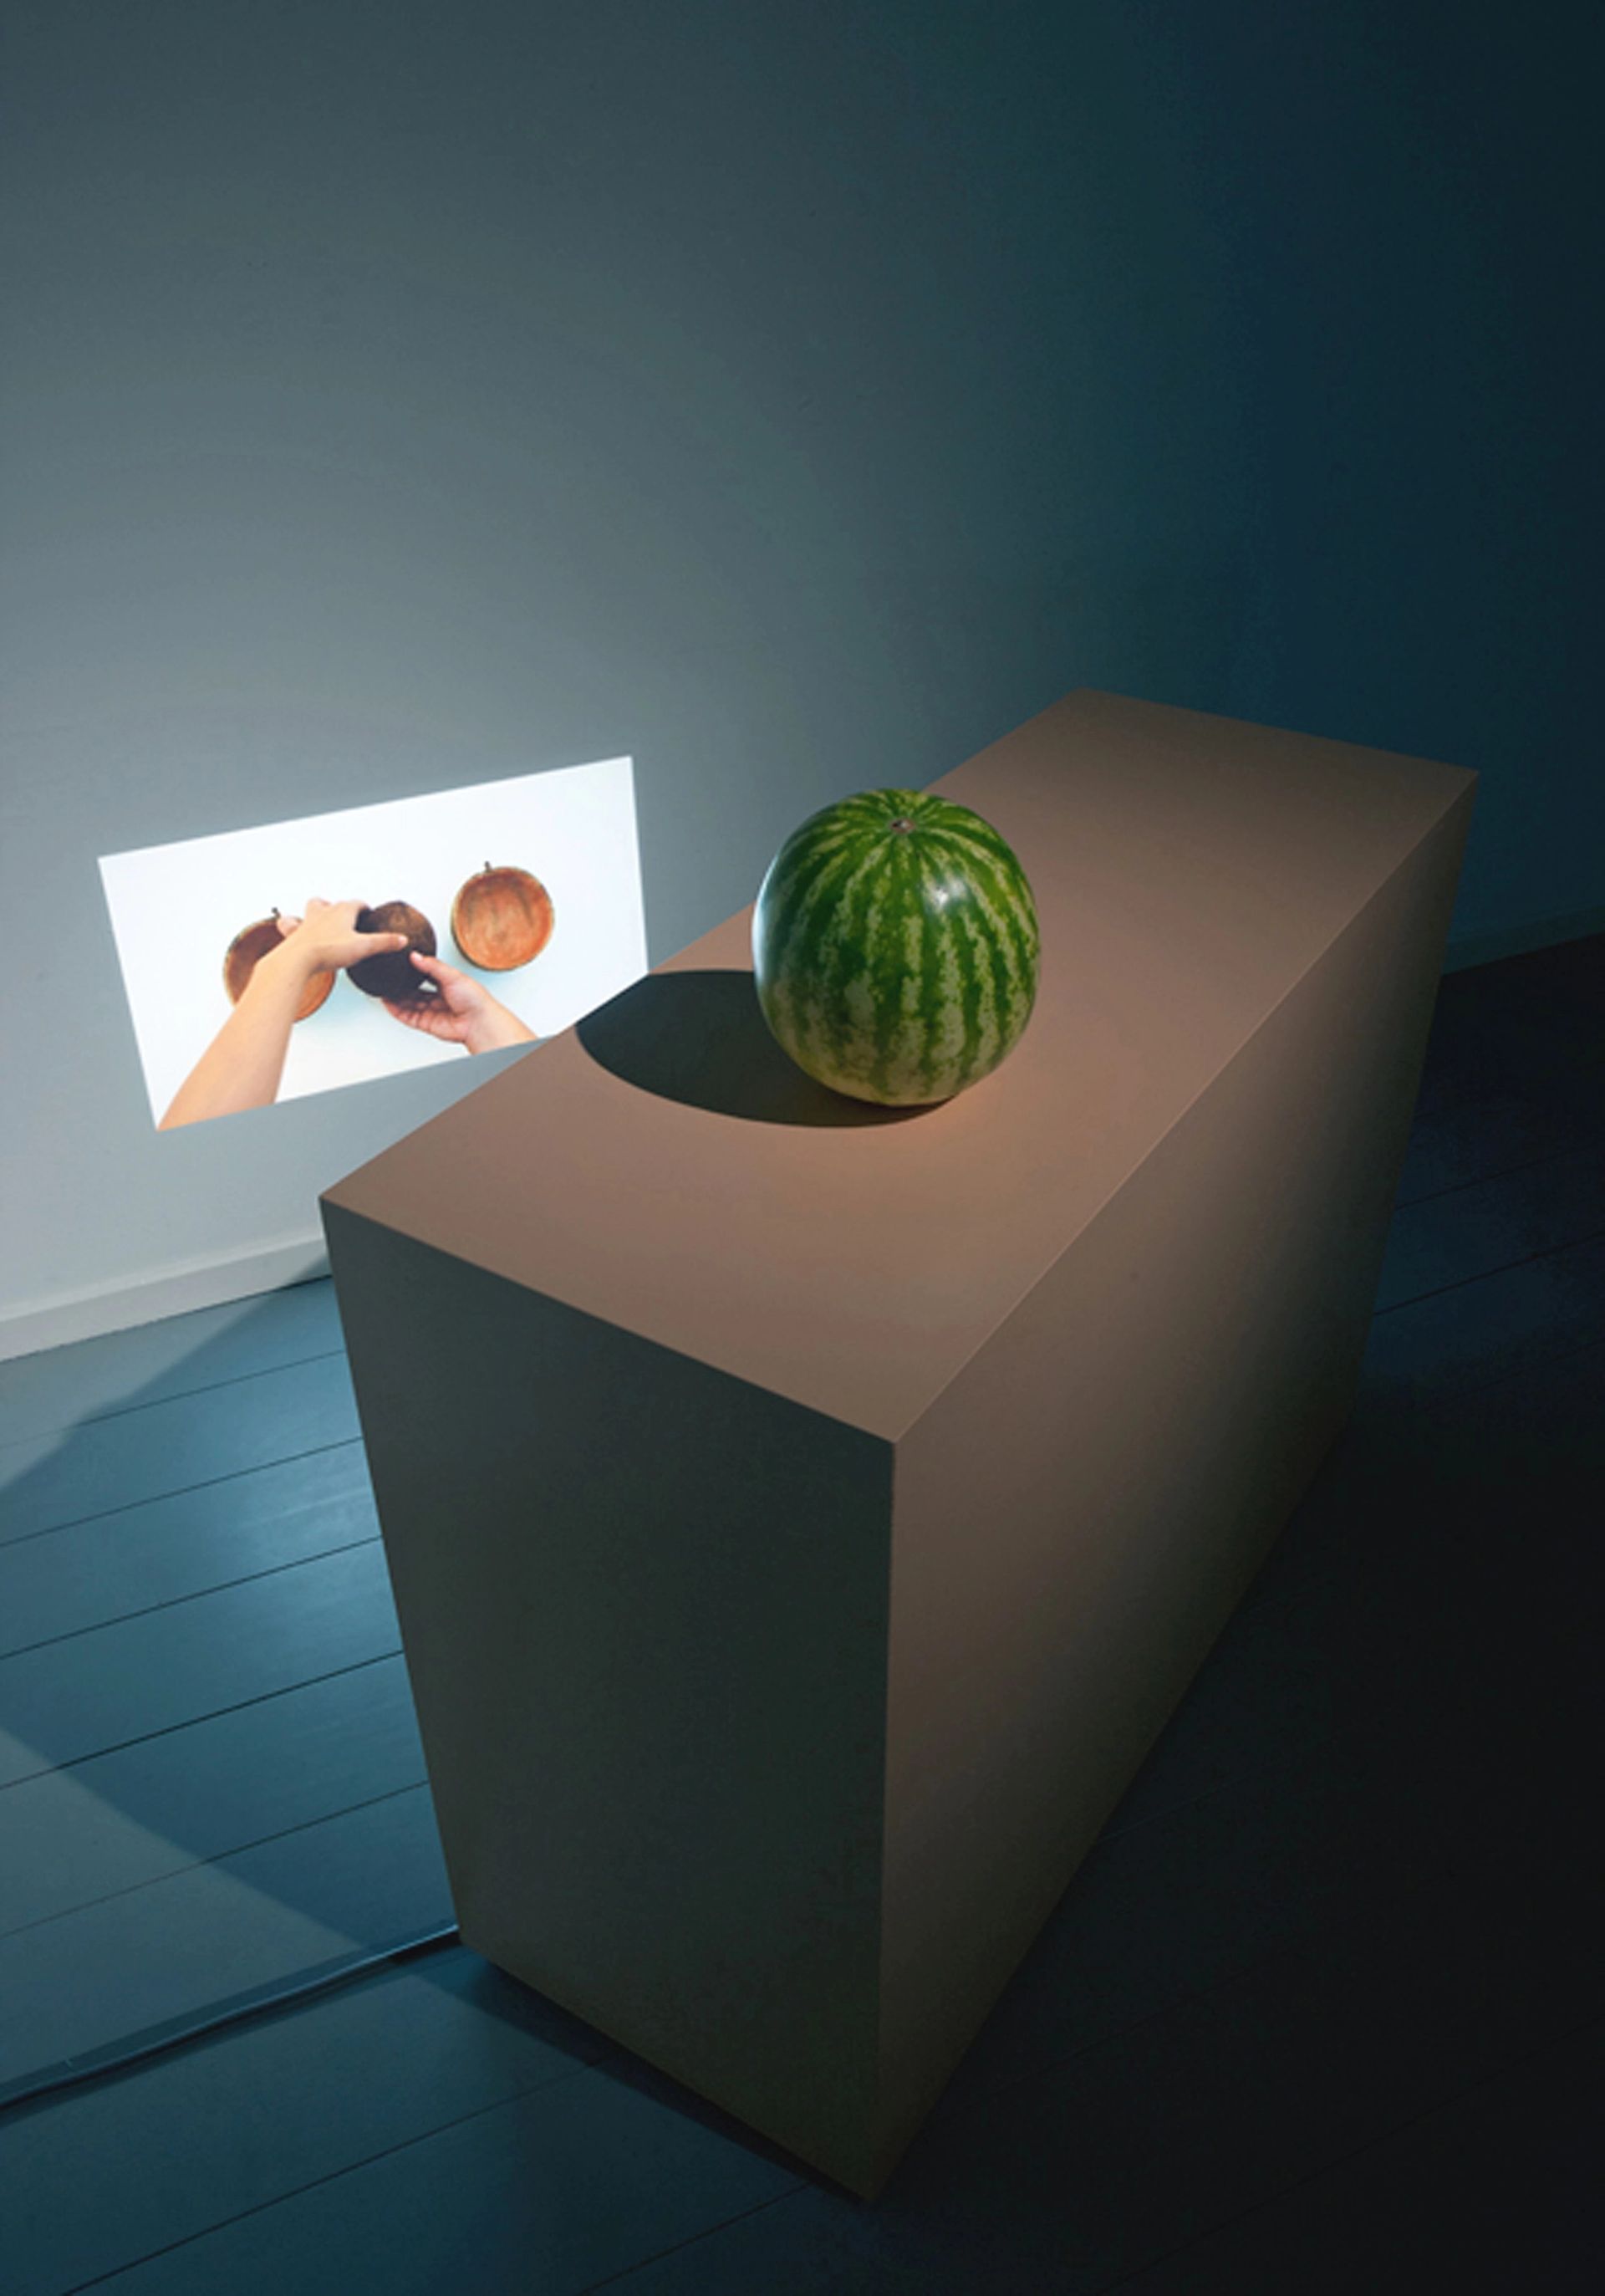 Ana Navas, Untitled (fruits), 2012, videoinstallation, photo: Gert Jan van Rooij